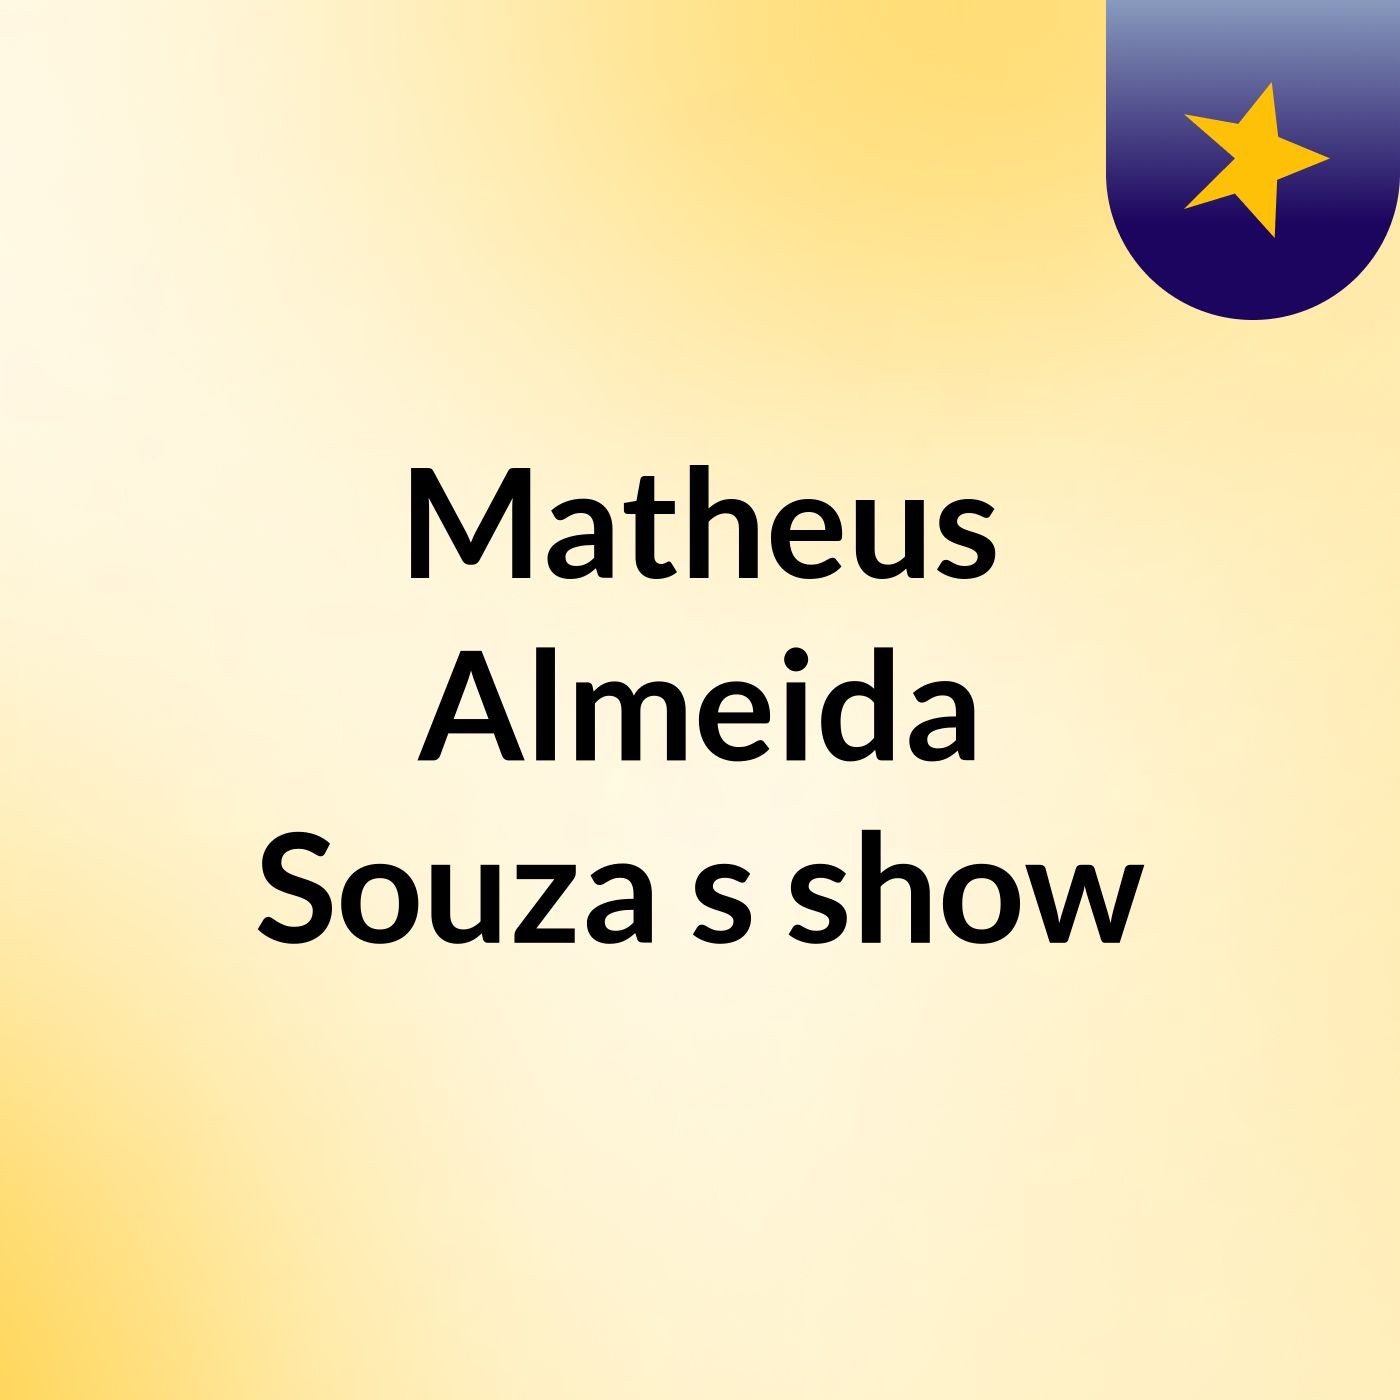 Matheus Almeida Souza's show